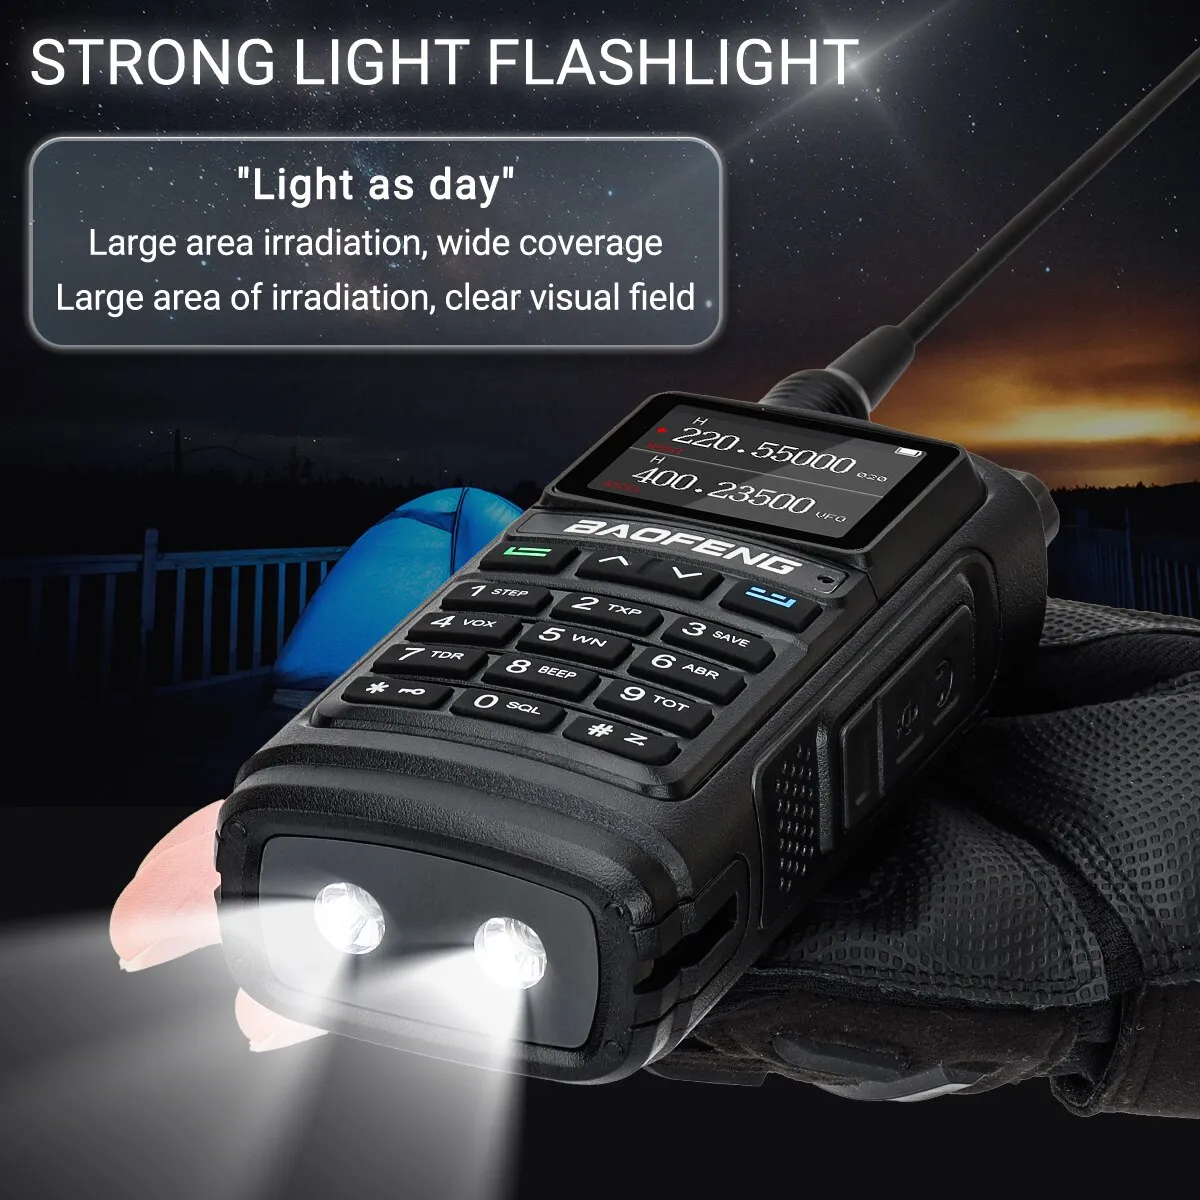 Baofeng UV 17 Pro Wireless Copy Frequency Walkie Talkie 16 KM Long Range Waterproof Flashlight Type-C Charger Ham Radio UV 5R